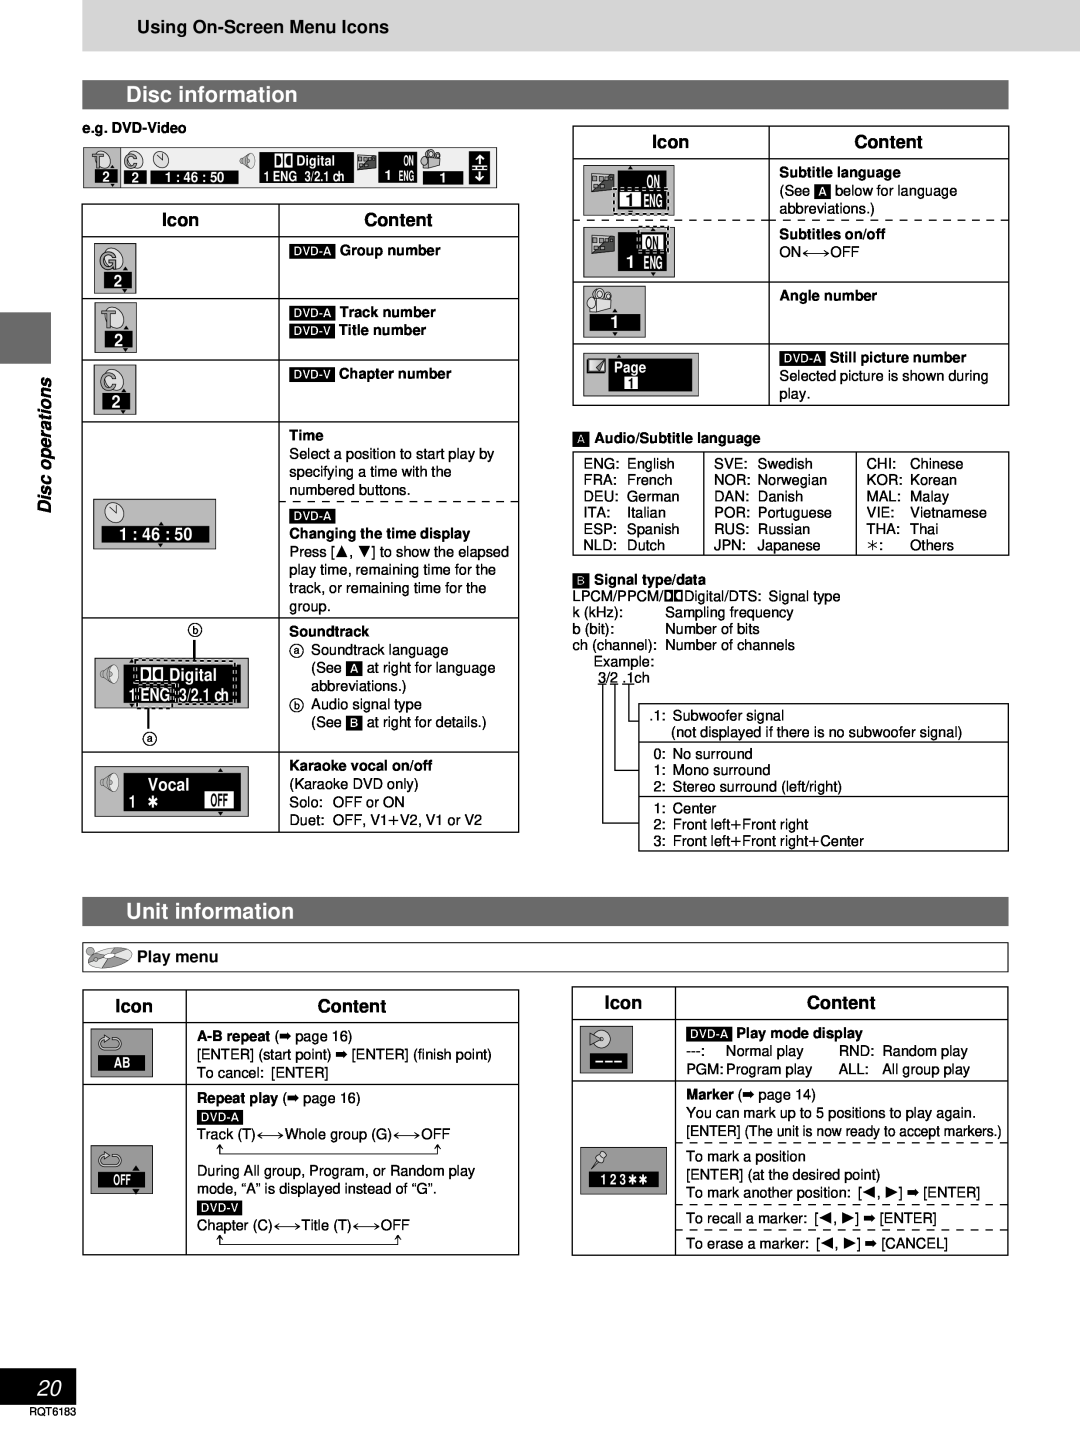 Panasonic SC-HT95 warranty Disc information, Unit information, Î Digital, 1 ENG, 3/2.1 ch, Vocal, Disc operations 